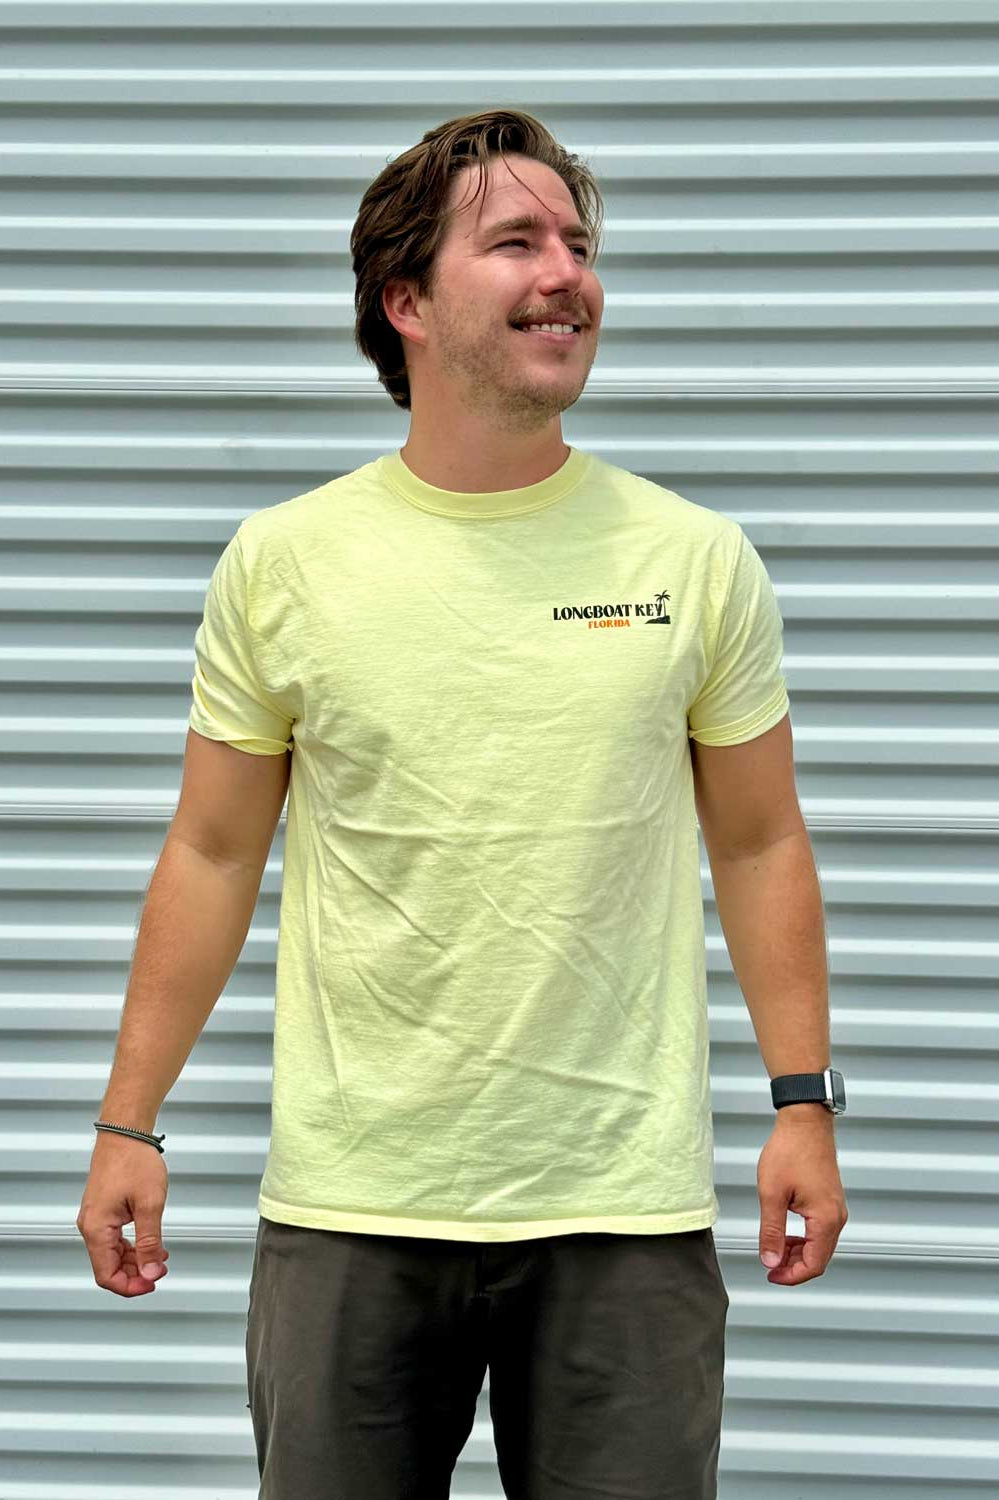 Techstyles: Men's Process Longboat Key Explorer T-Shirt